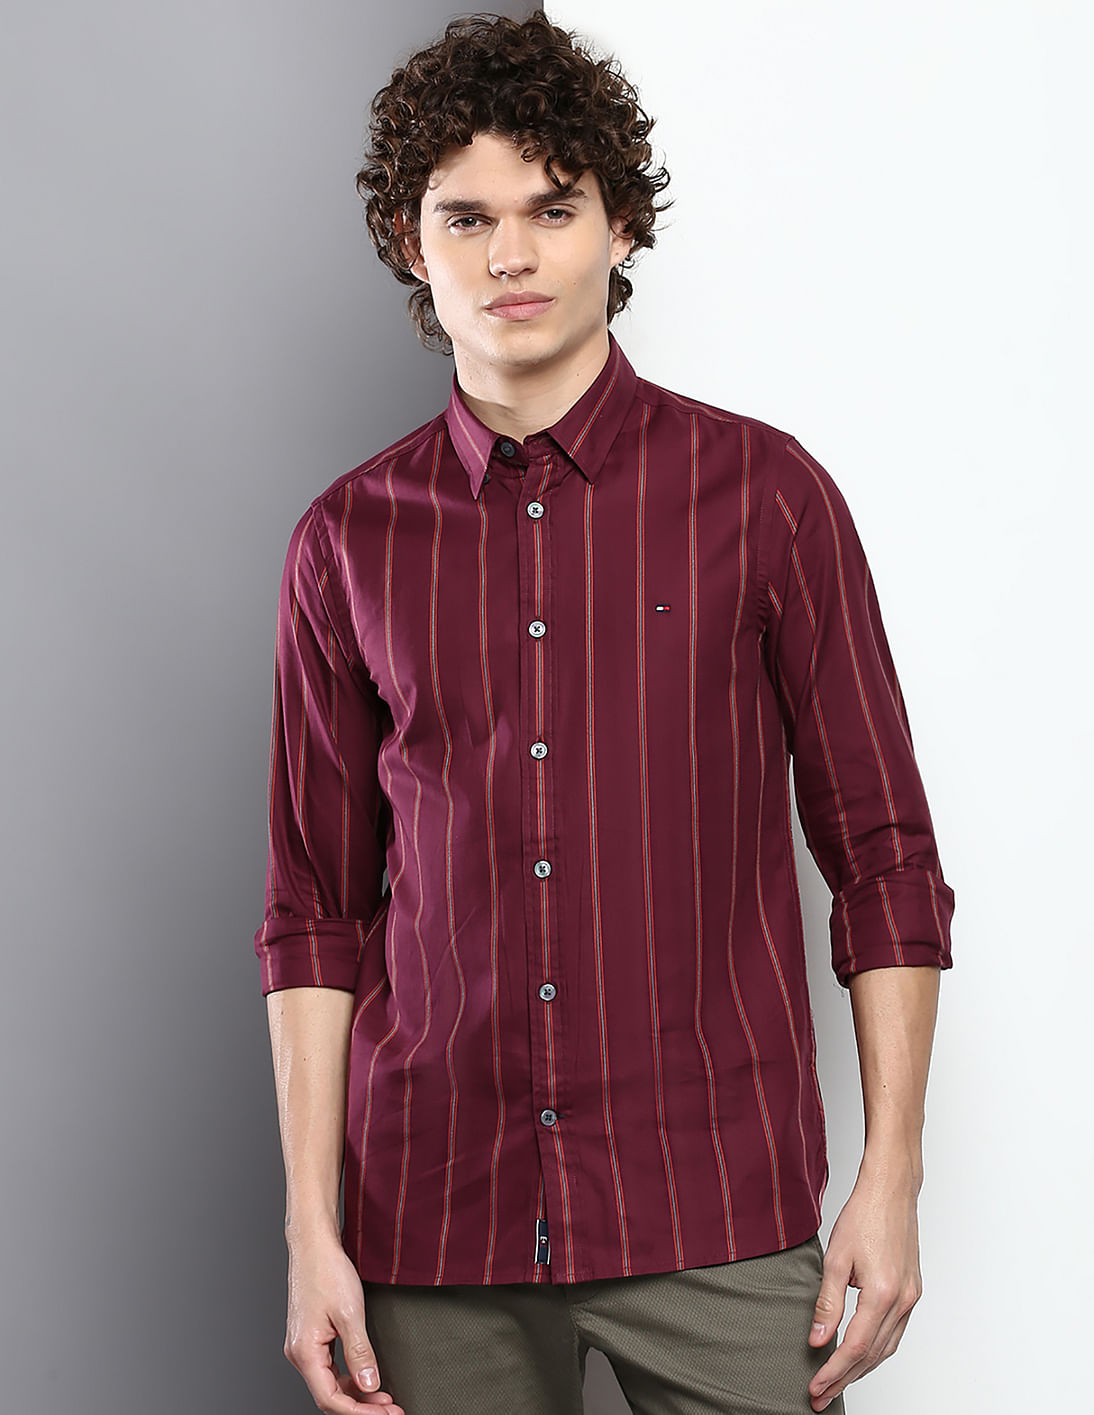 Buy Tommy Hilfiger Vertical Stripe Herringbone Casual Shirt - NNNOW.com